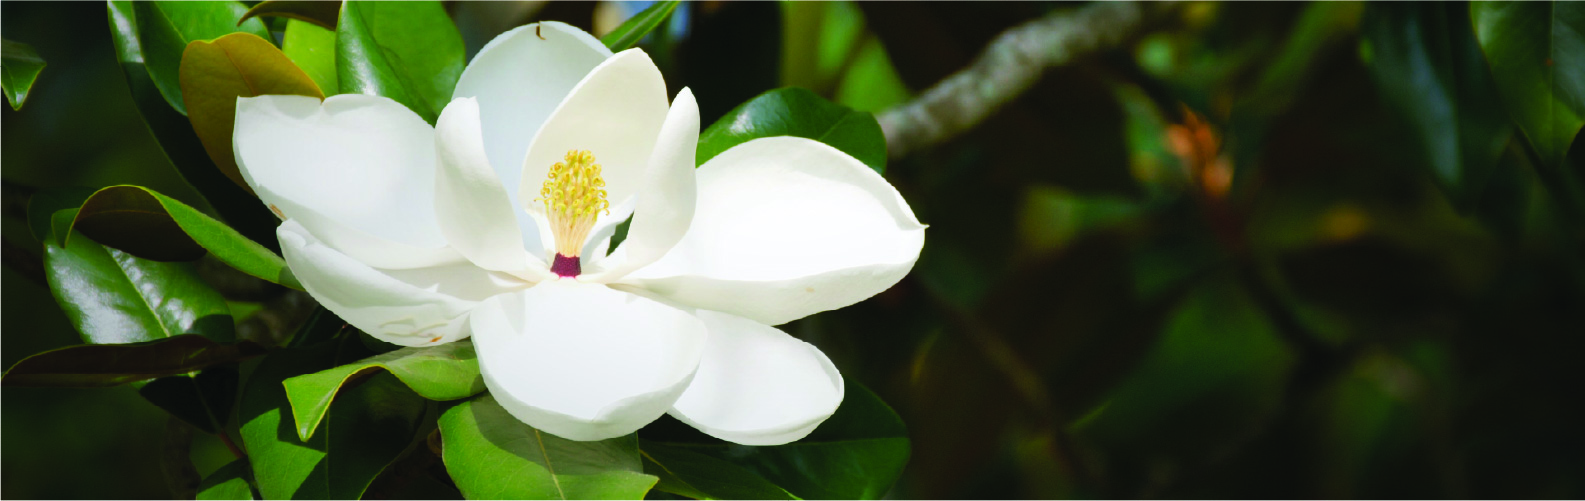 seaside-magnolia@2x-80